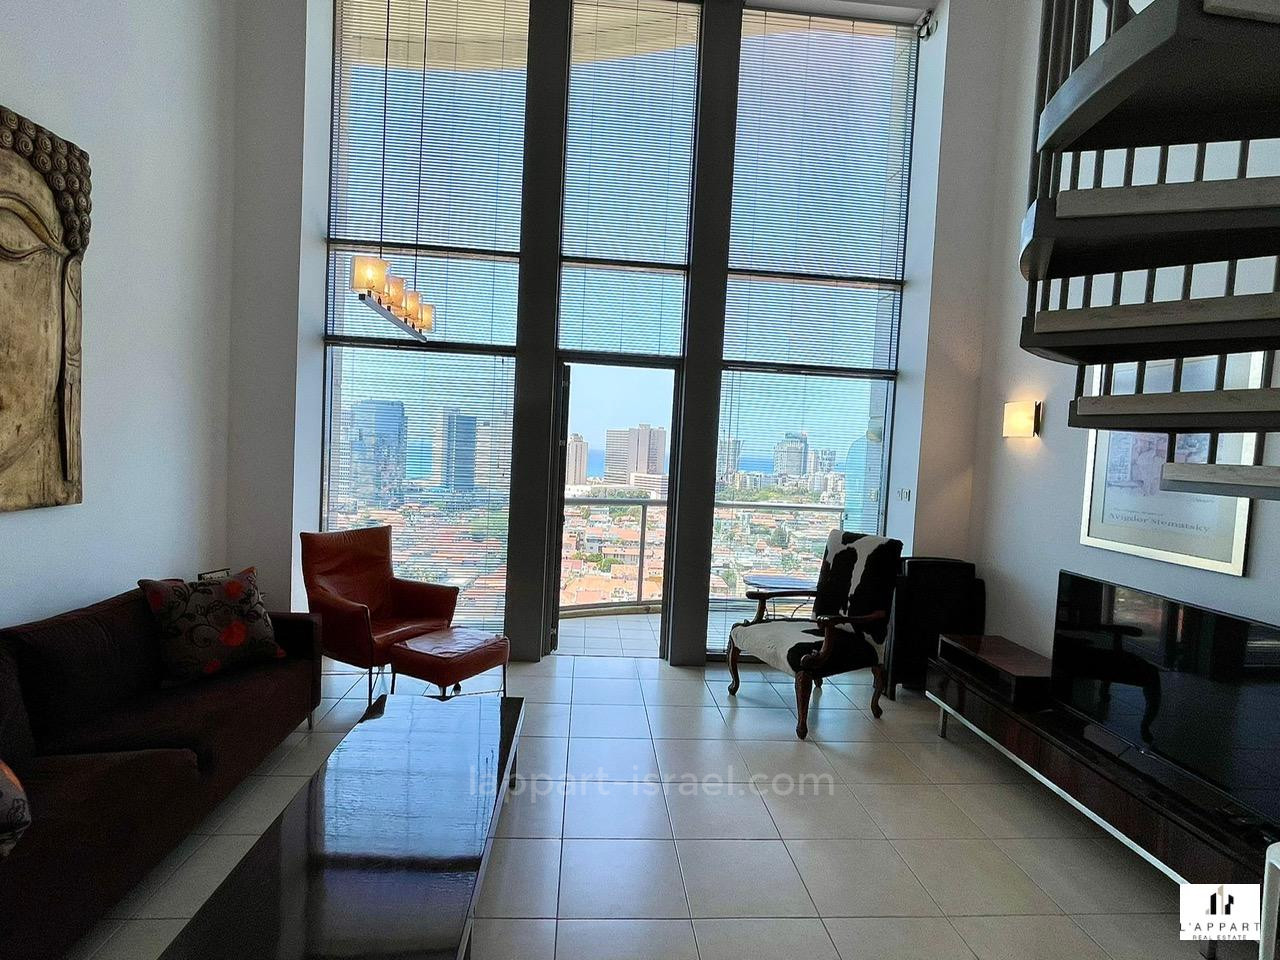 Appartement 2 pièces Tel Aviv Neve Tsedek 175-IBL-3172